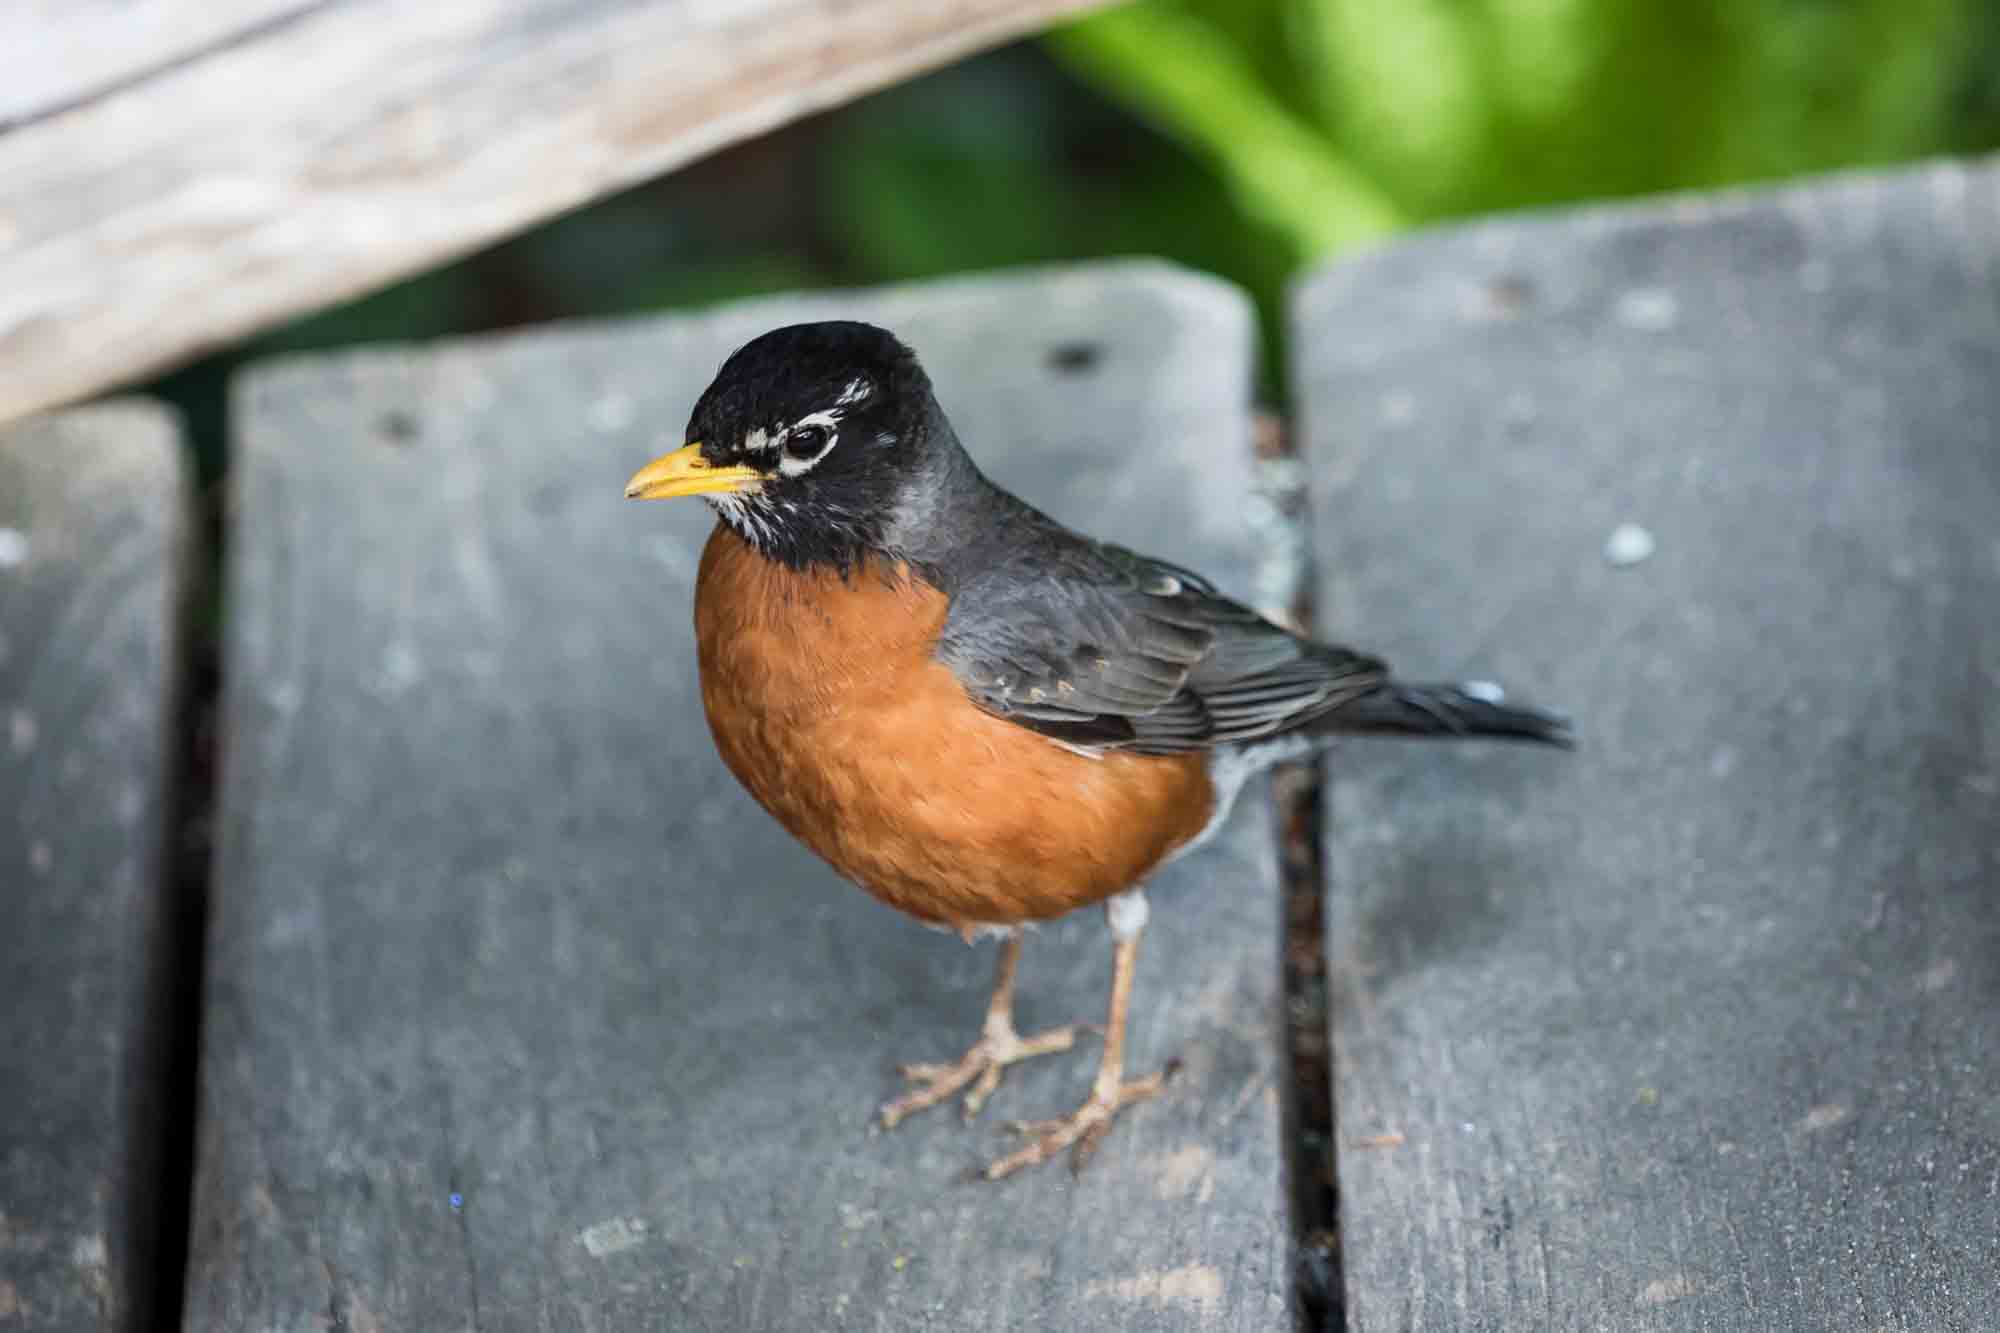 Robin bird standing on wooden board